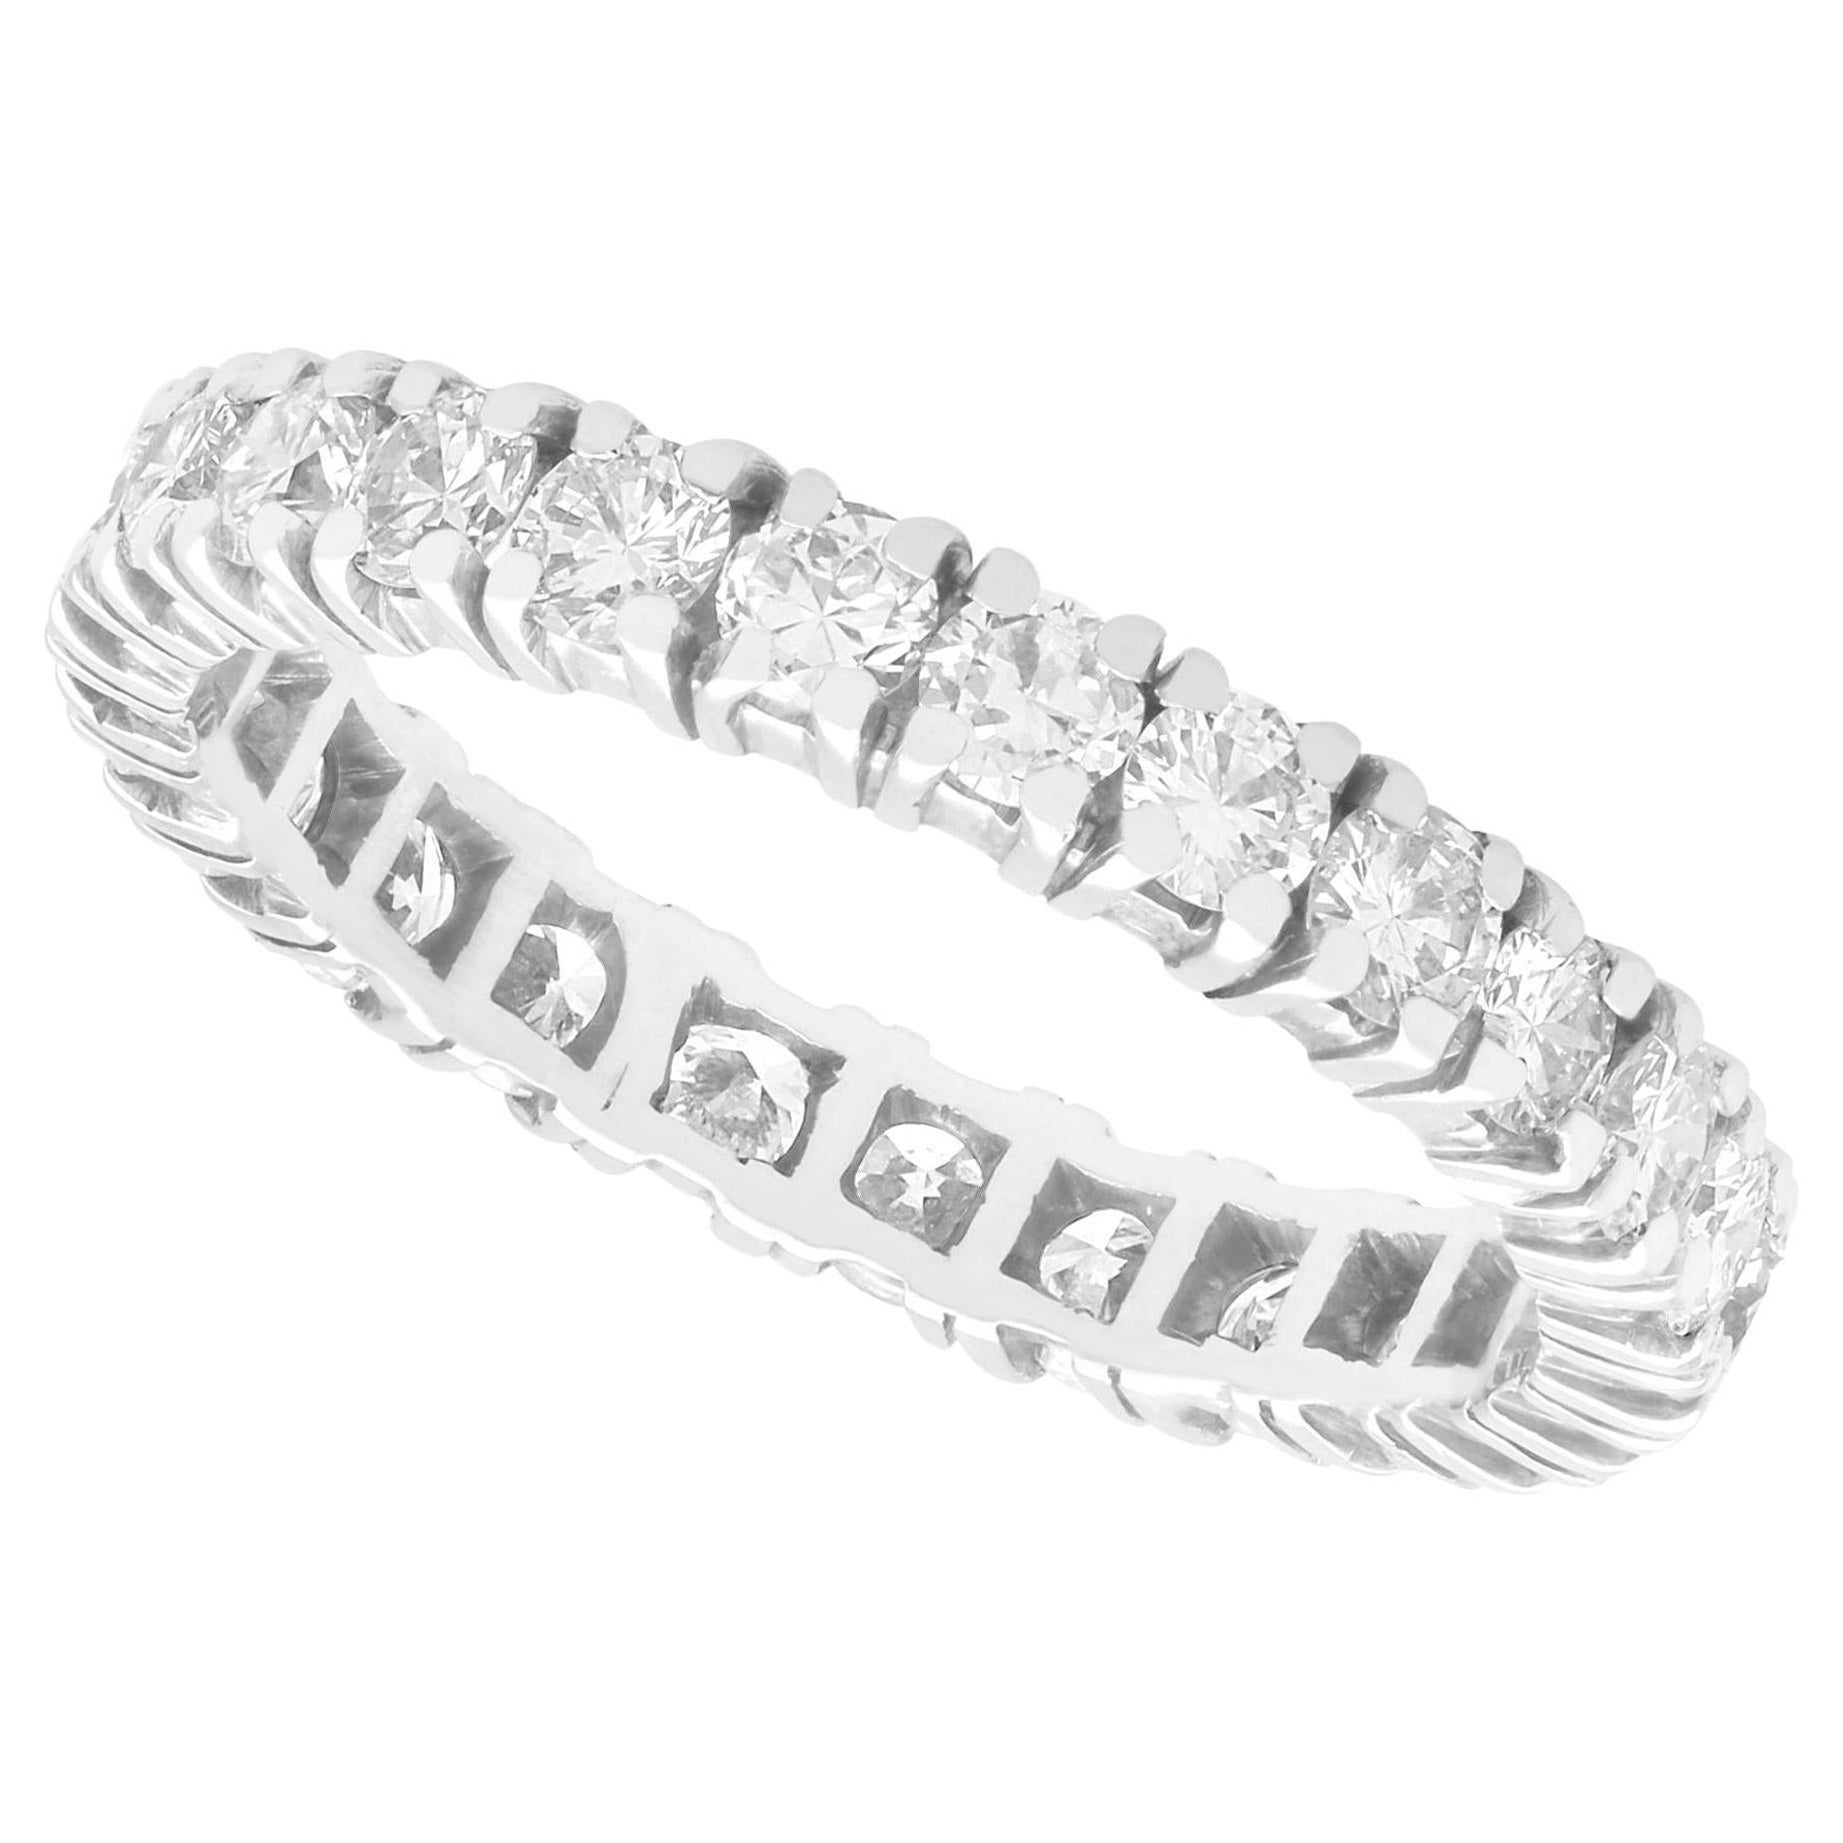 Vintage 3 Carat Diamond Eternity Ring in White Gold